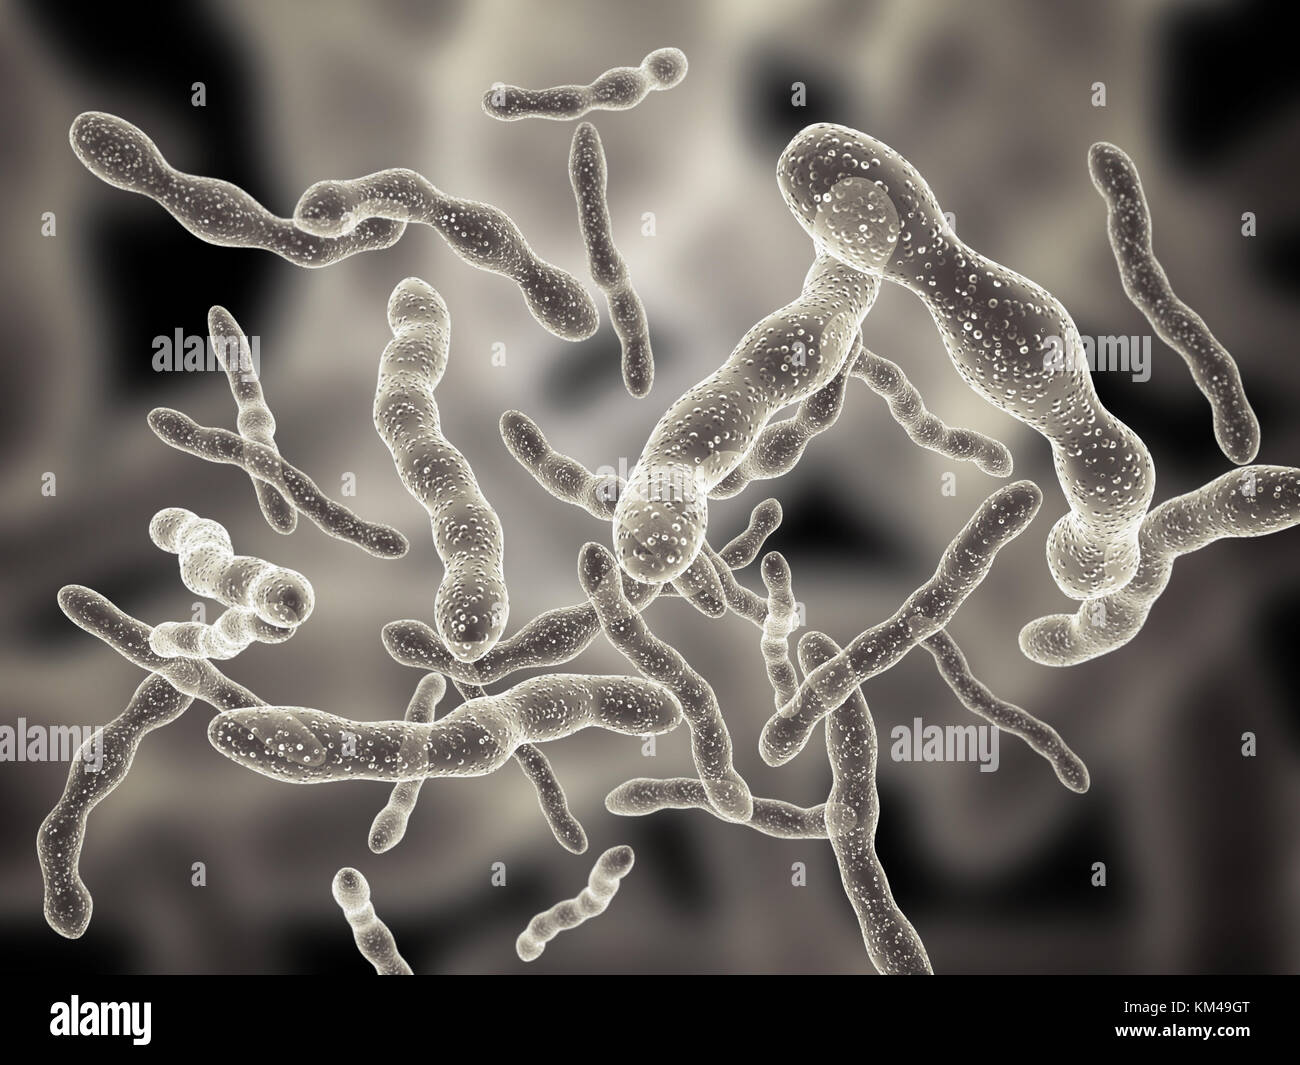 Aprender sobre 79+ imagem fotos de bactérias reais - br.thptnganamst.edu.vn